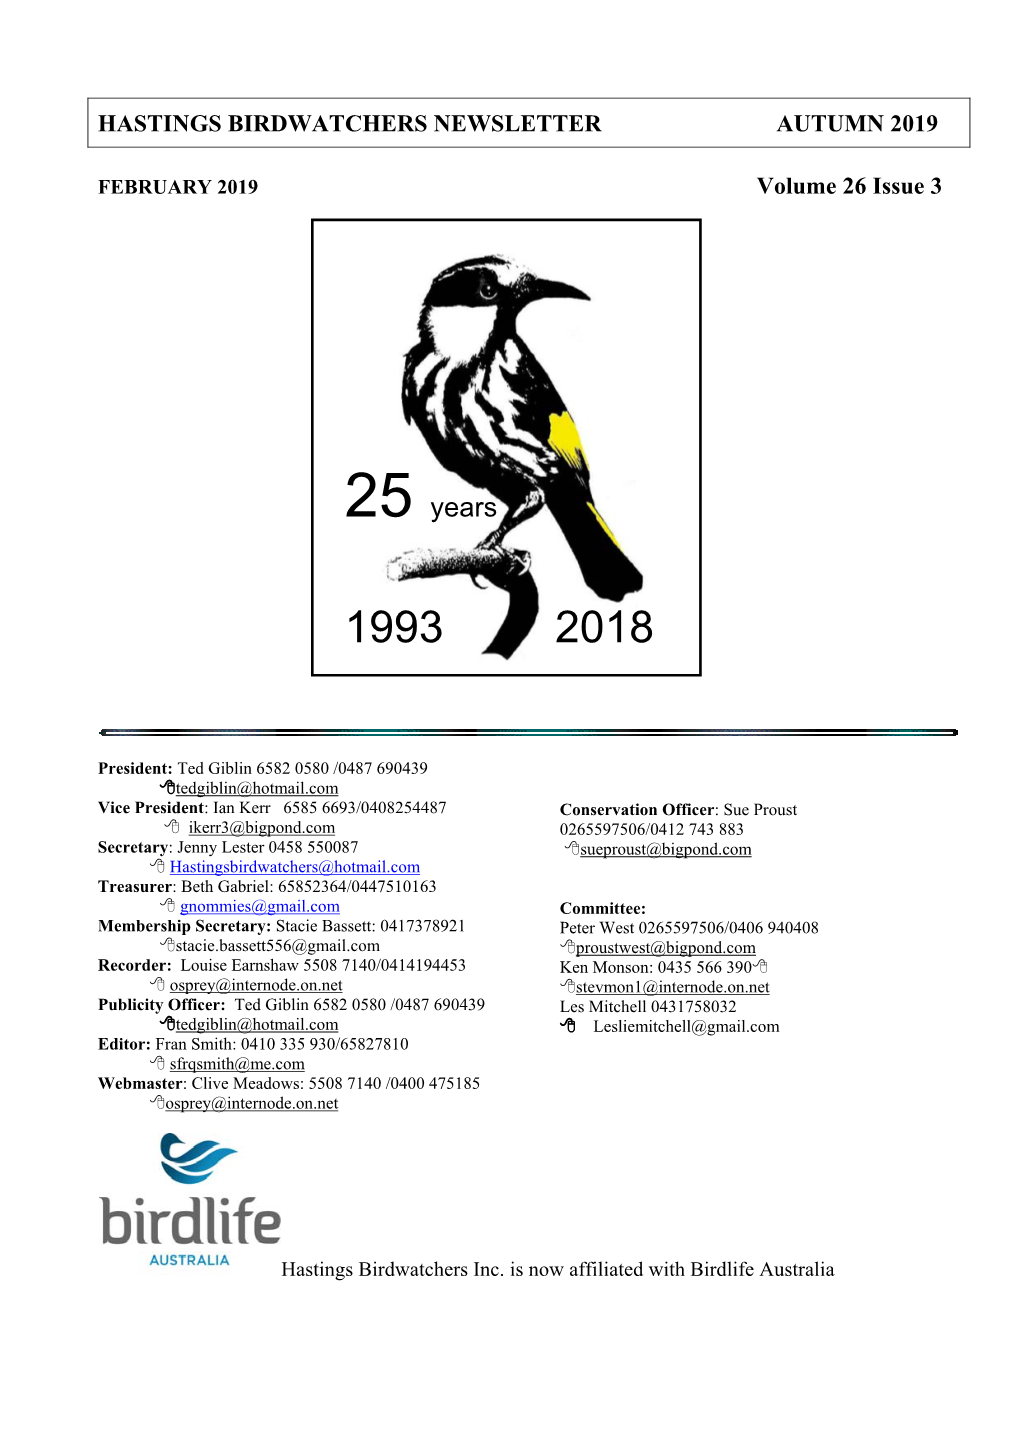 Hastings Birdwatchers Newsletter –Autumn 2019 9